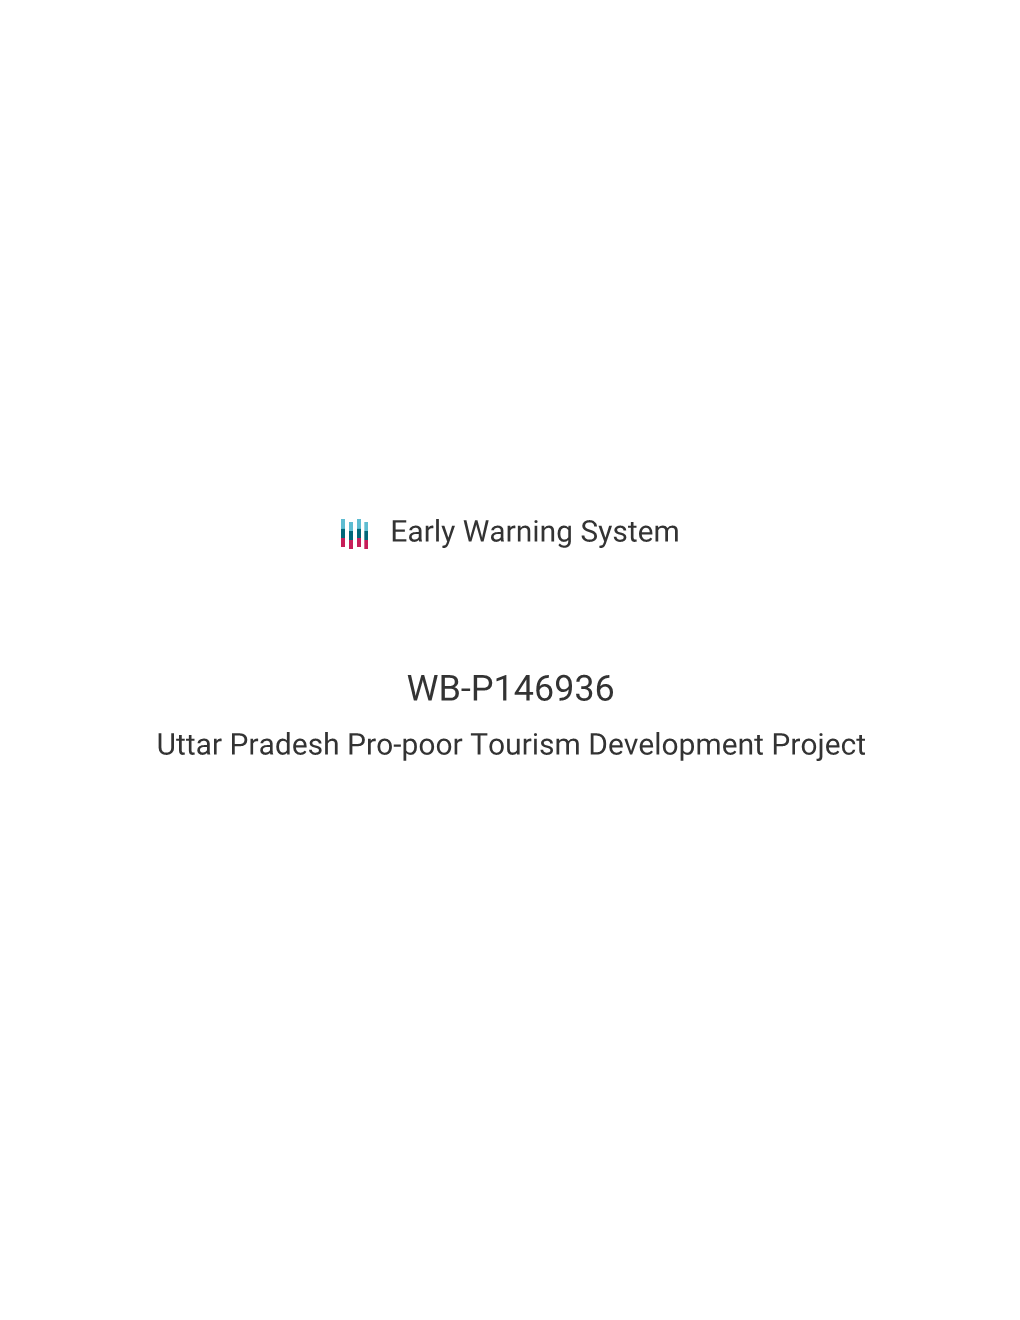 Uttar Pradesh Pro-Poor Tourism Development Project Early Warning System WB-P146936 Uttar Pradesh Pro-Poor Tourism Development Project